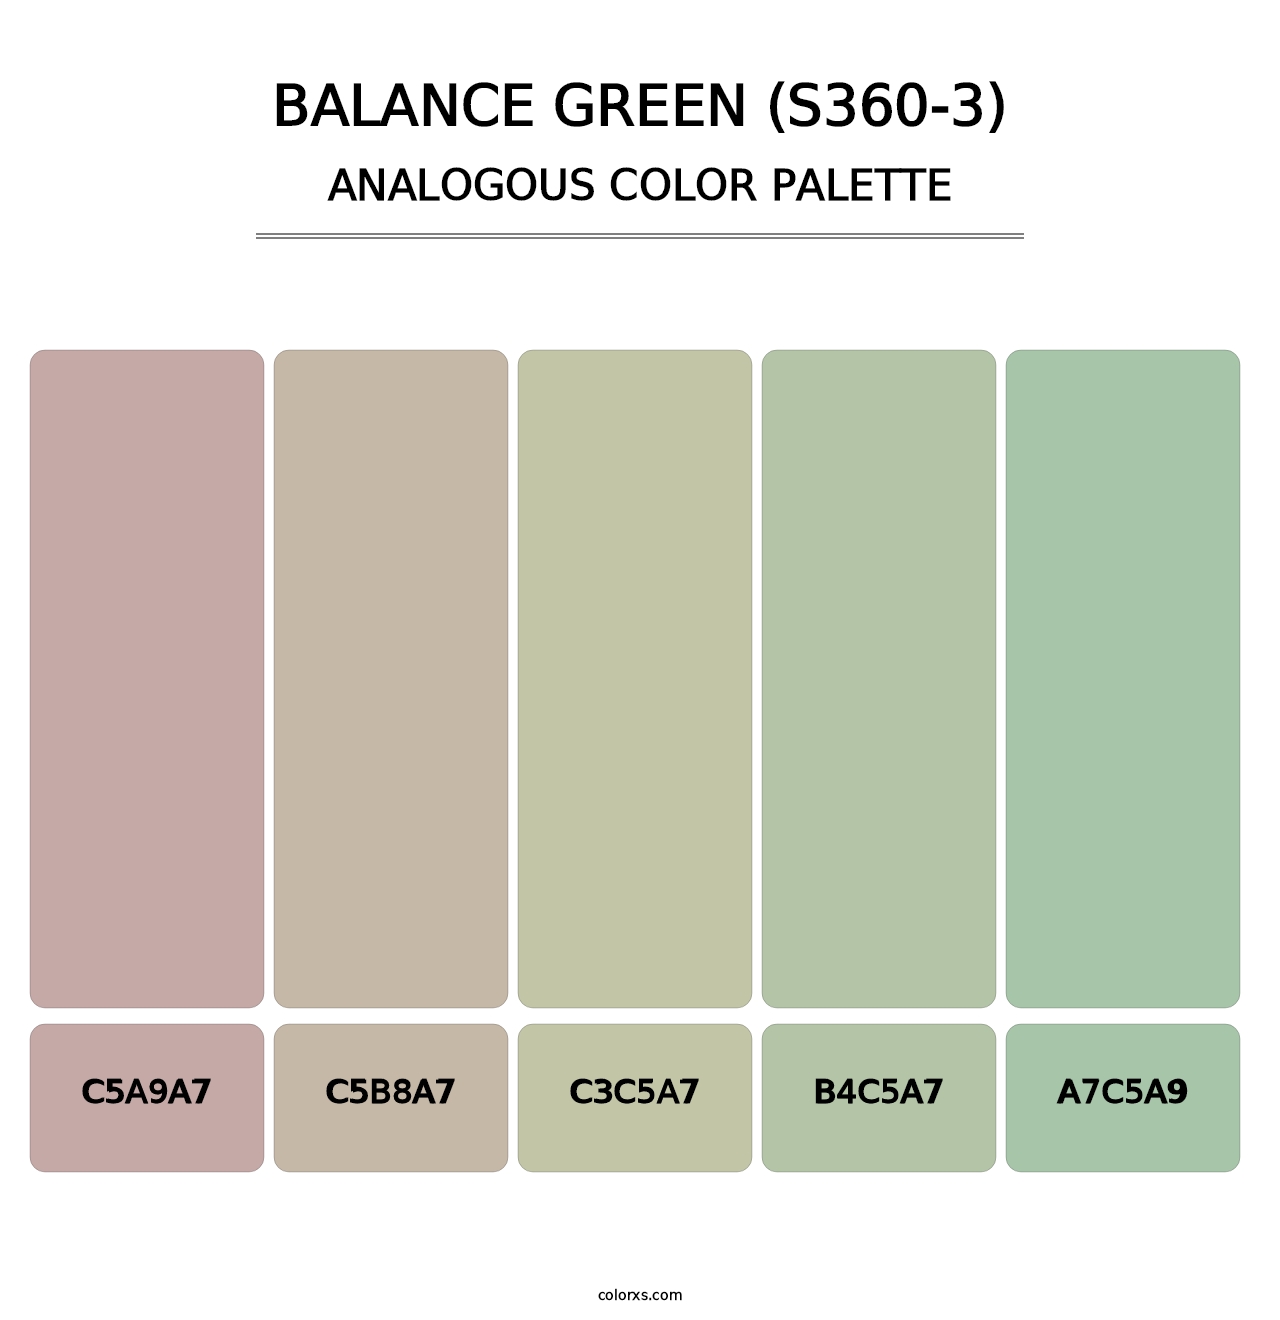 Balance Green (S360-3) - Analogous Color Palette